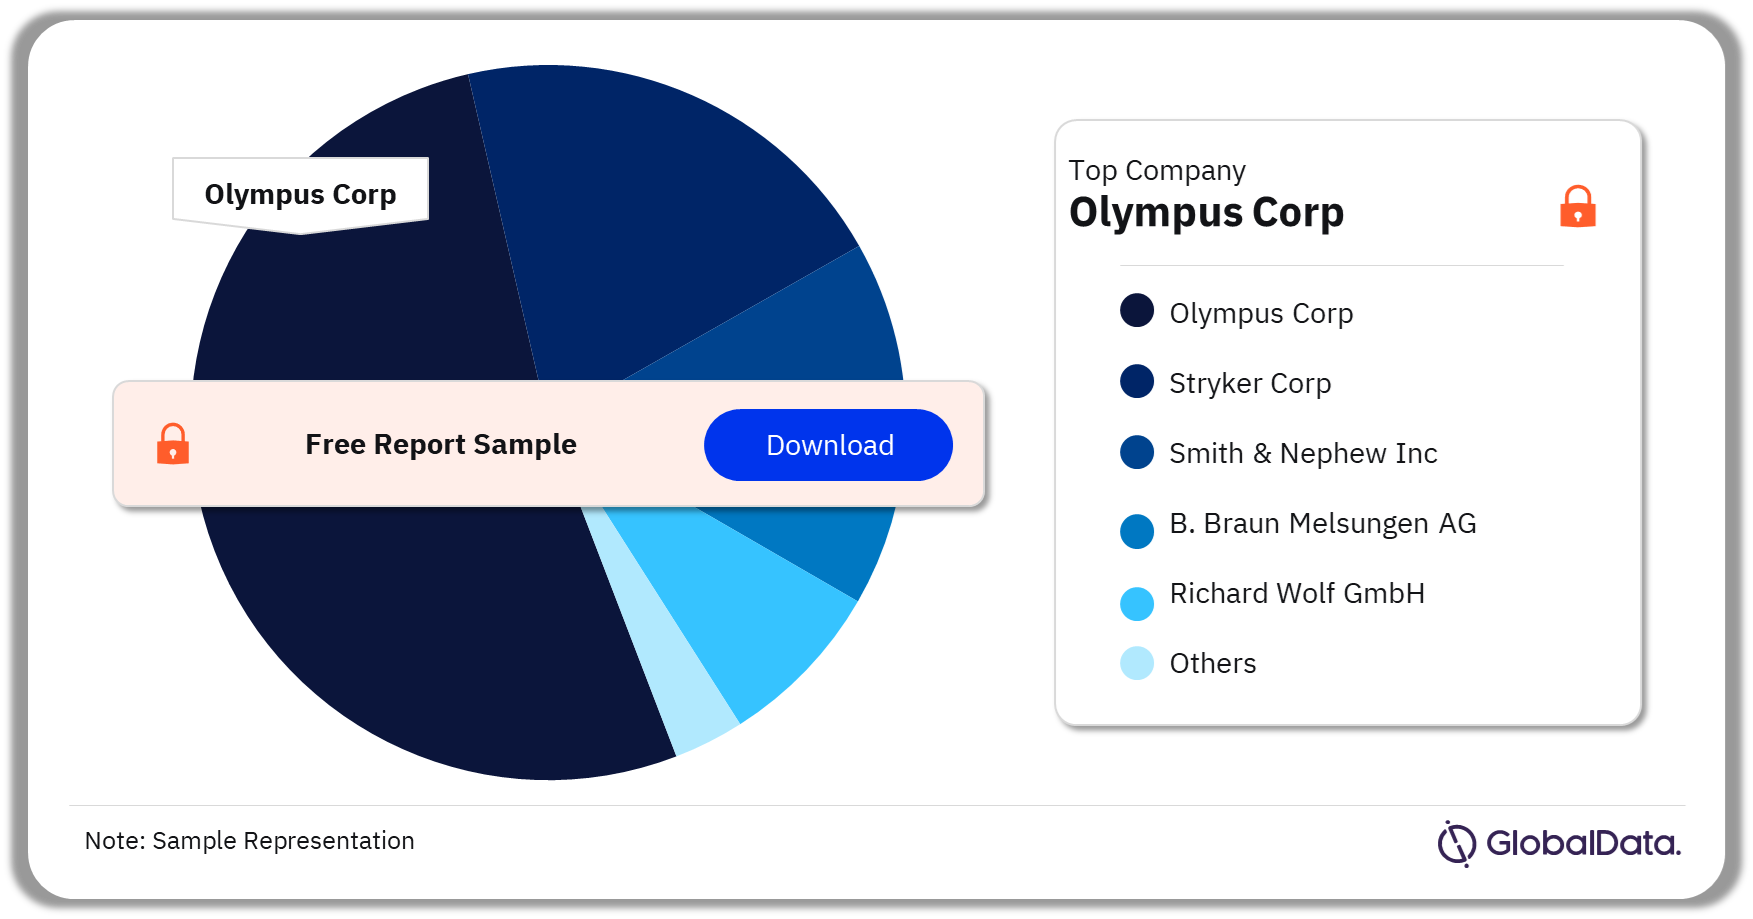 Laparoscopes Market Analysis by Companies, 2023 (%)